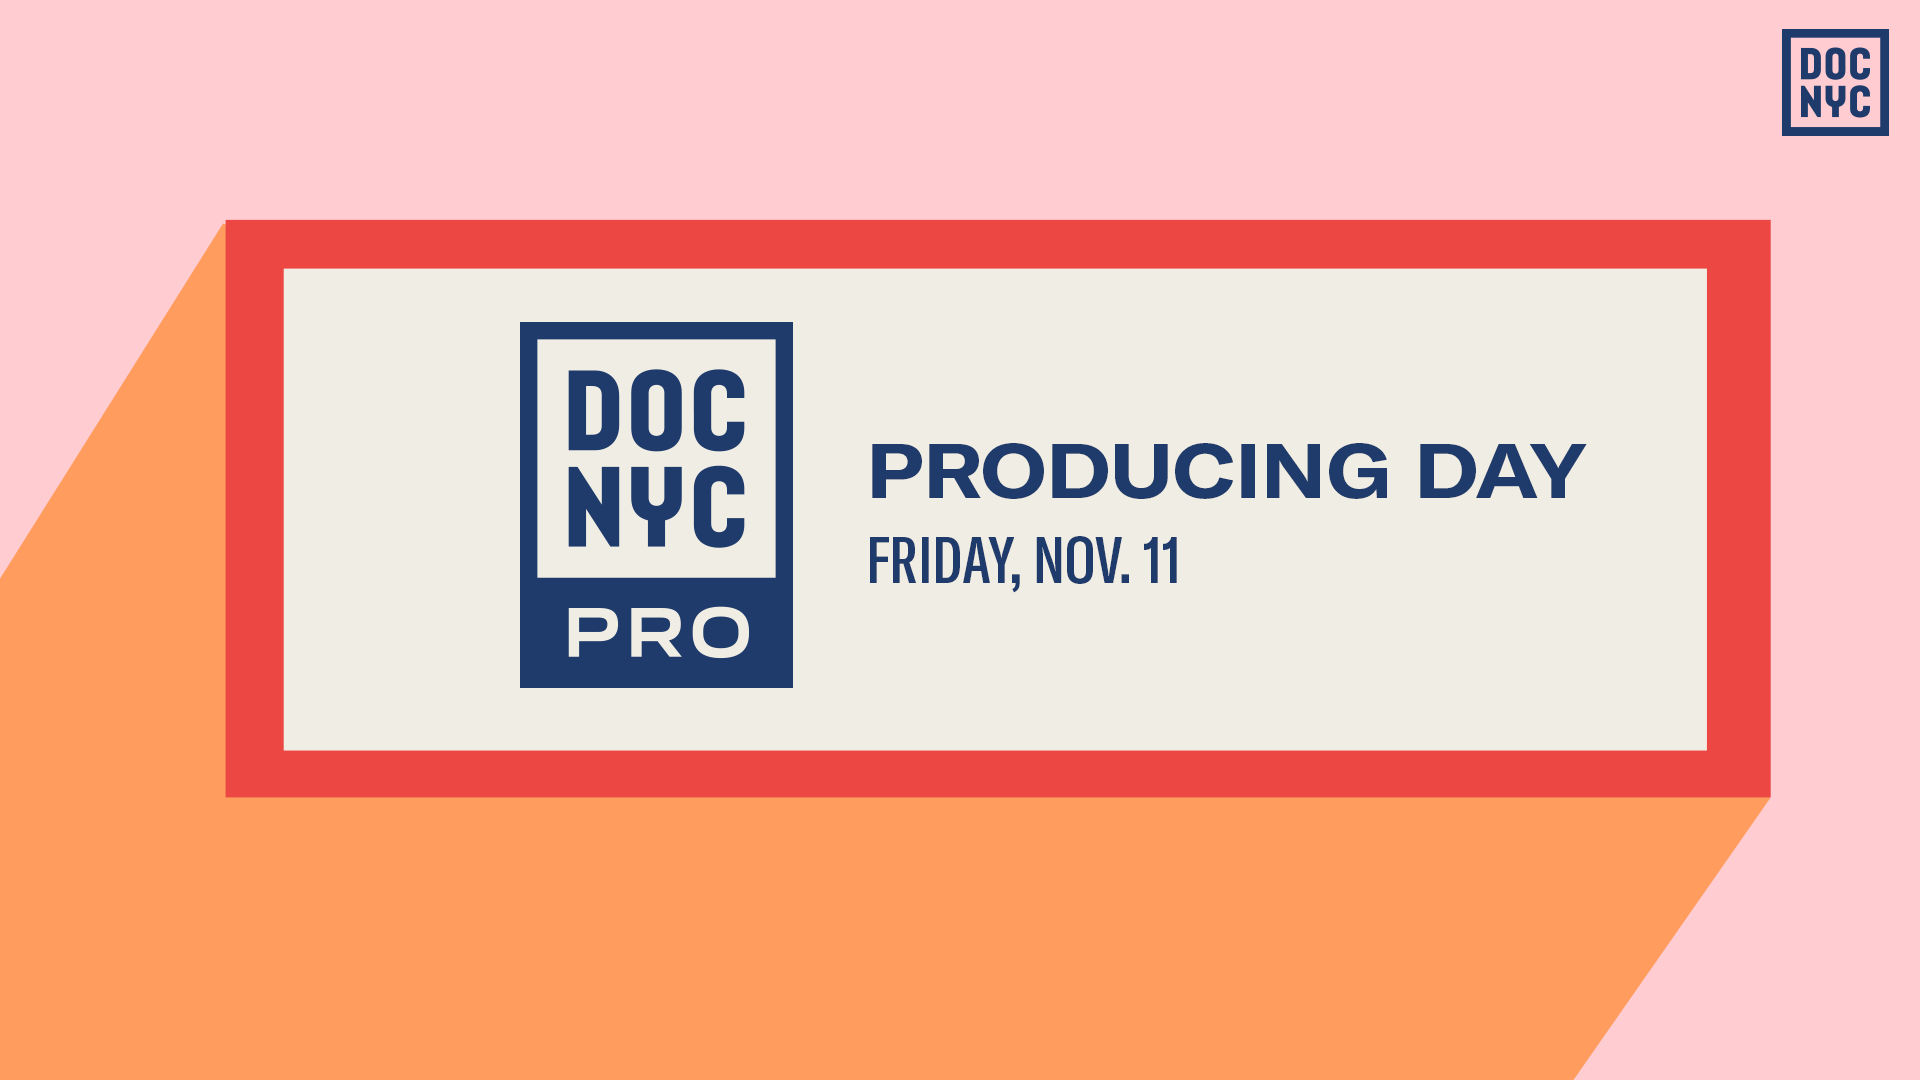 Producing Day (Nov. 11)